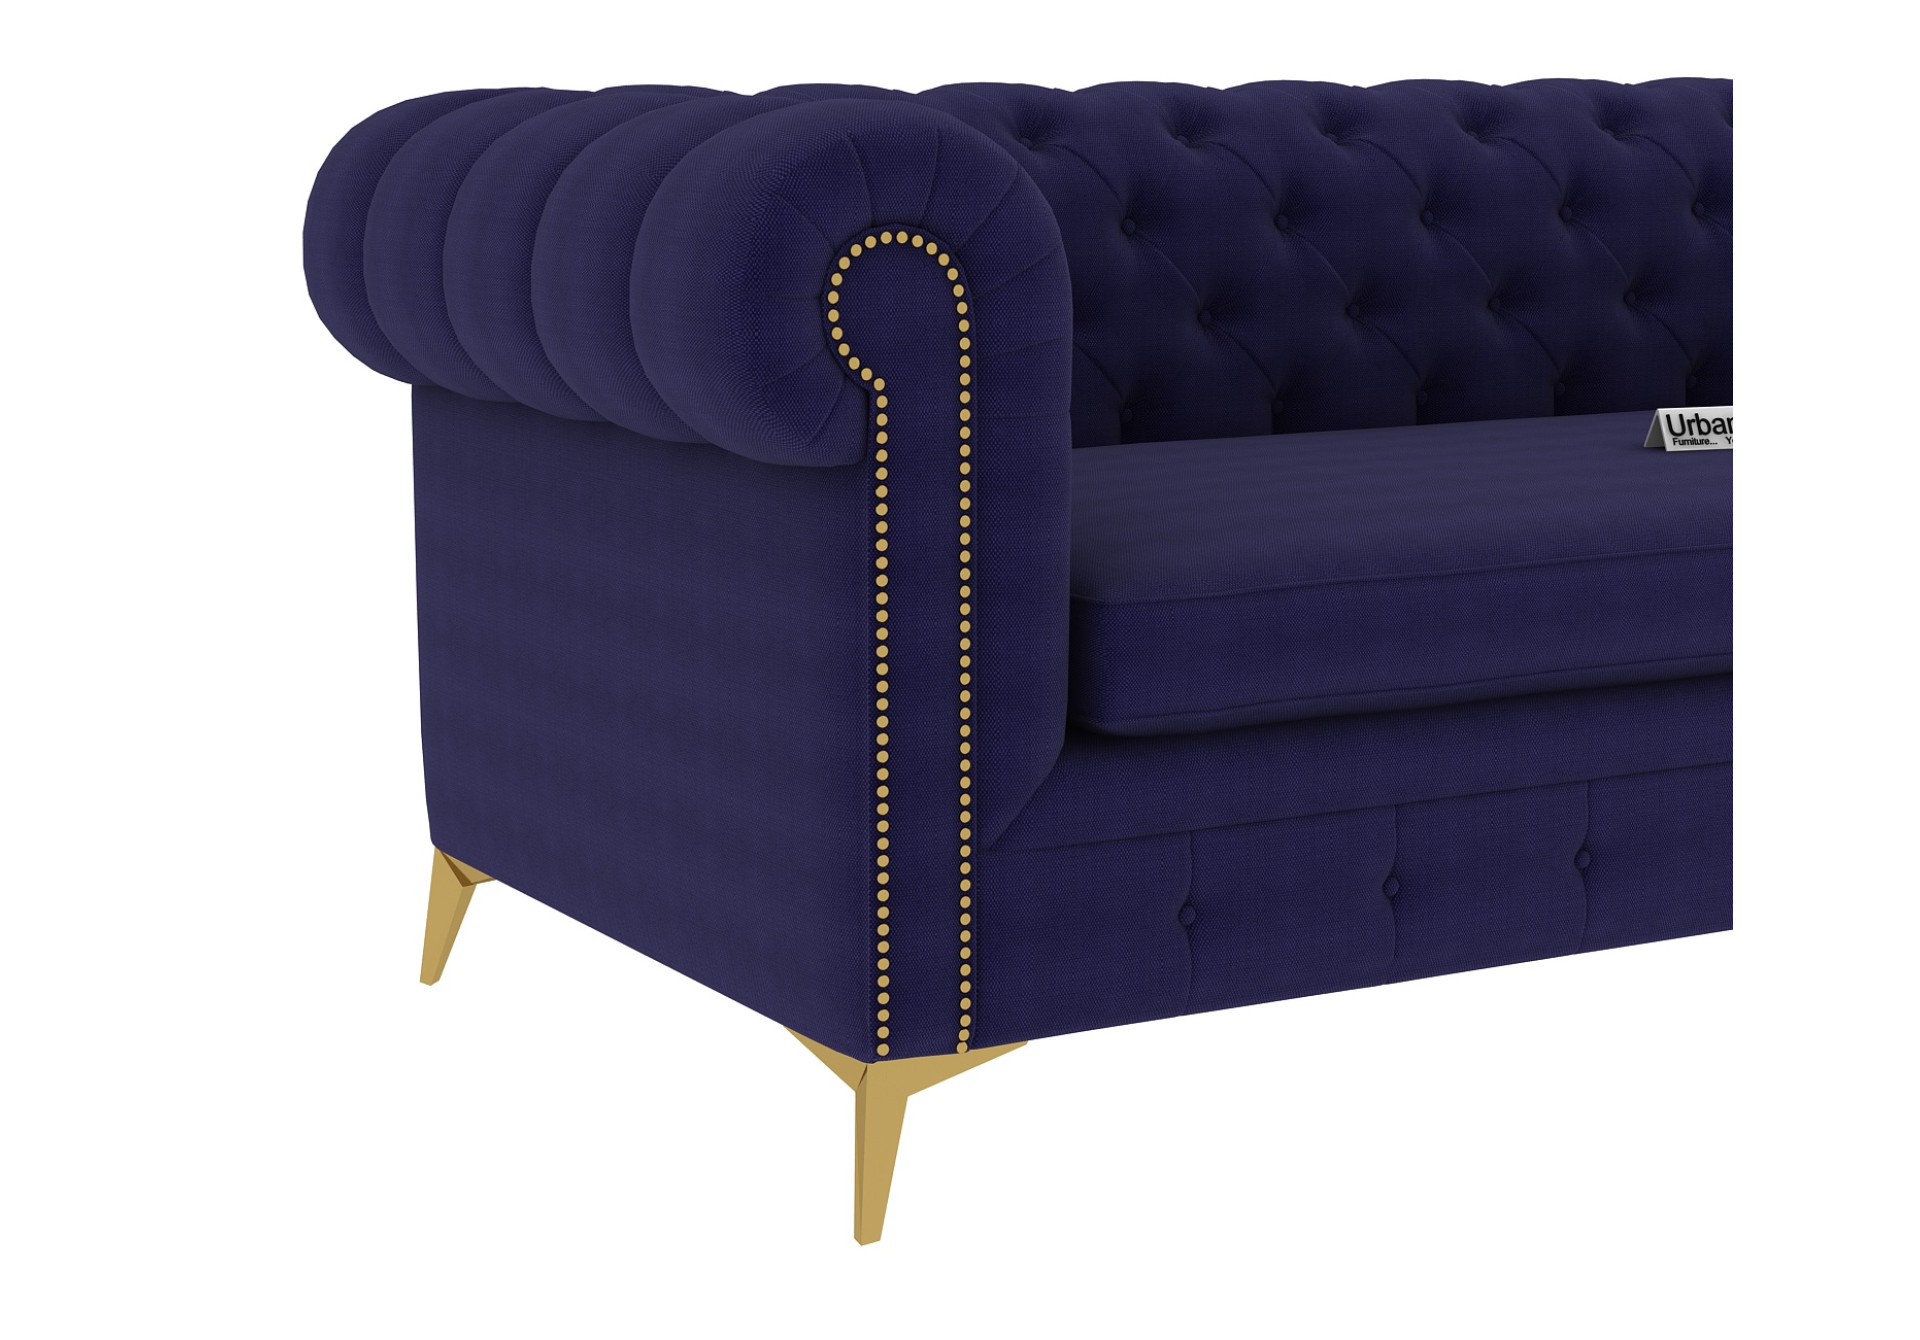 Regal 3+1+1 Seater Fabric Sofa (Cotton, Navy Blue)